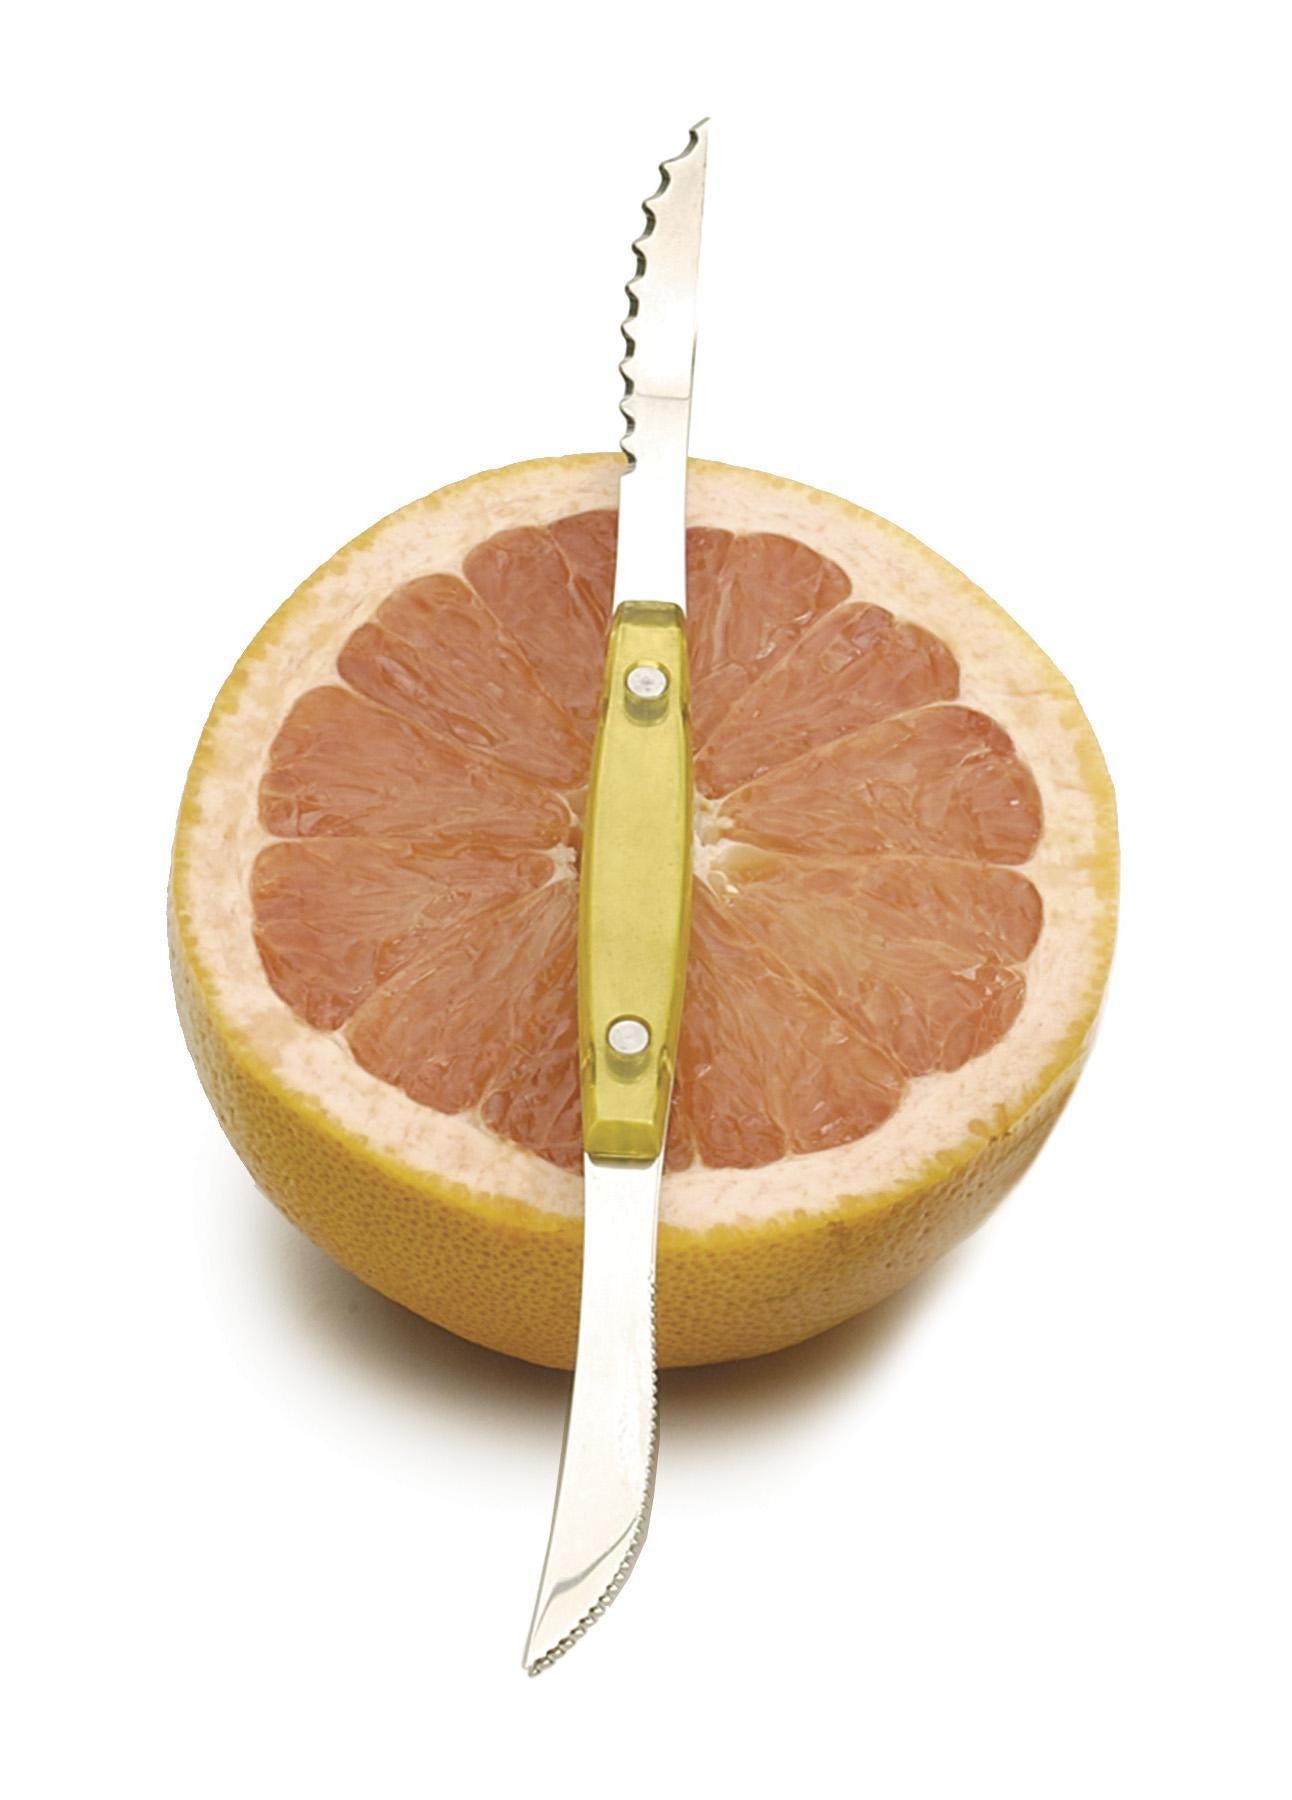 Citrus Fruit Sectioning Tools : how to cut grapefruit